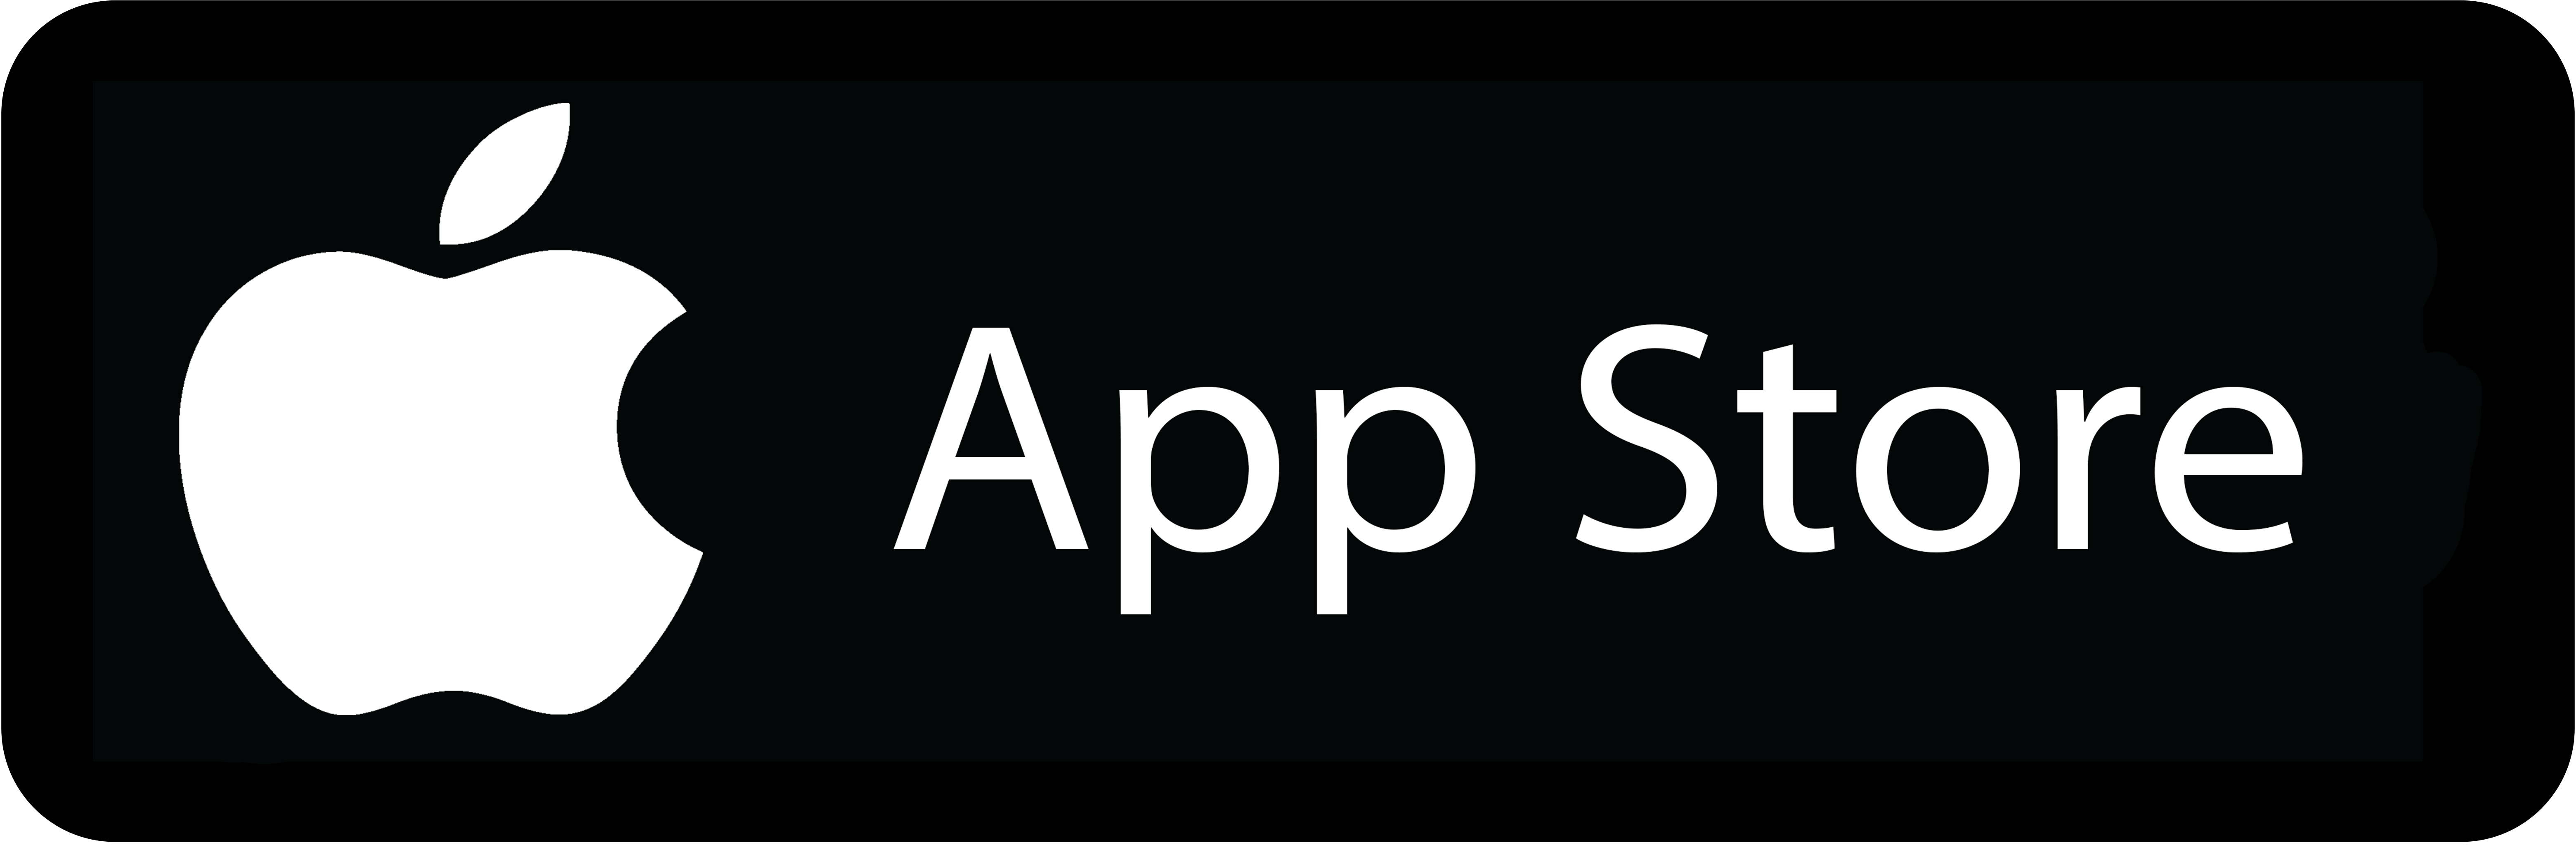 Apple Store приложение. Значок app Store. Логотип Apple. Логотип эпл сторе.